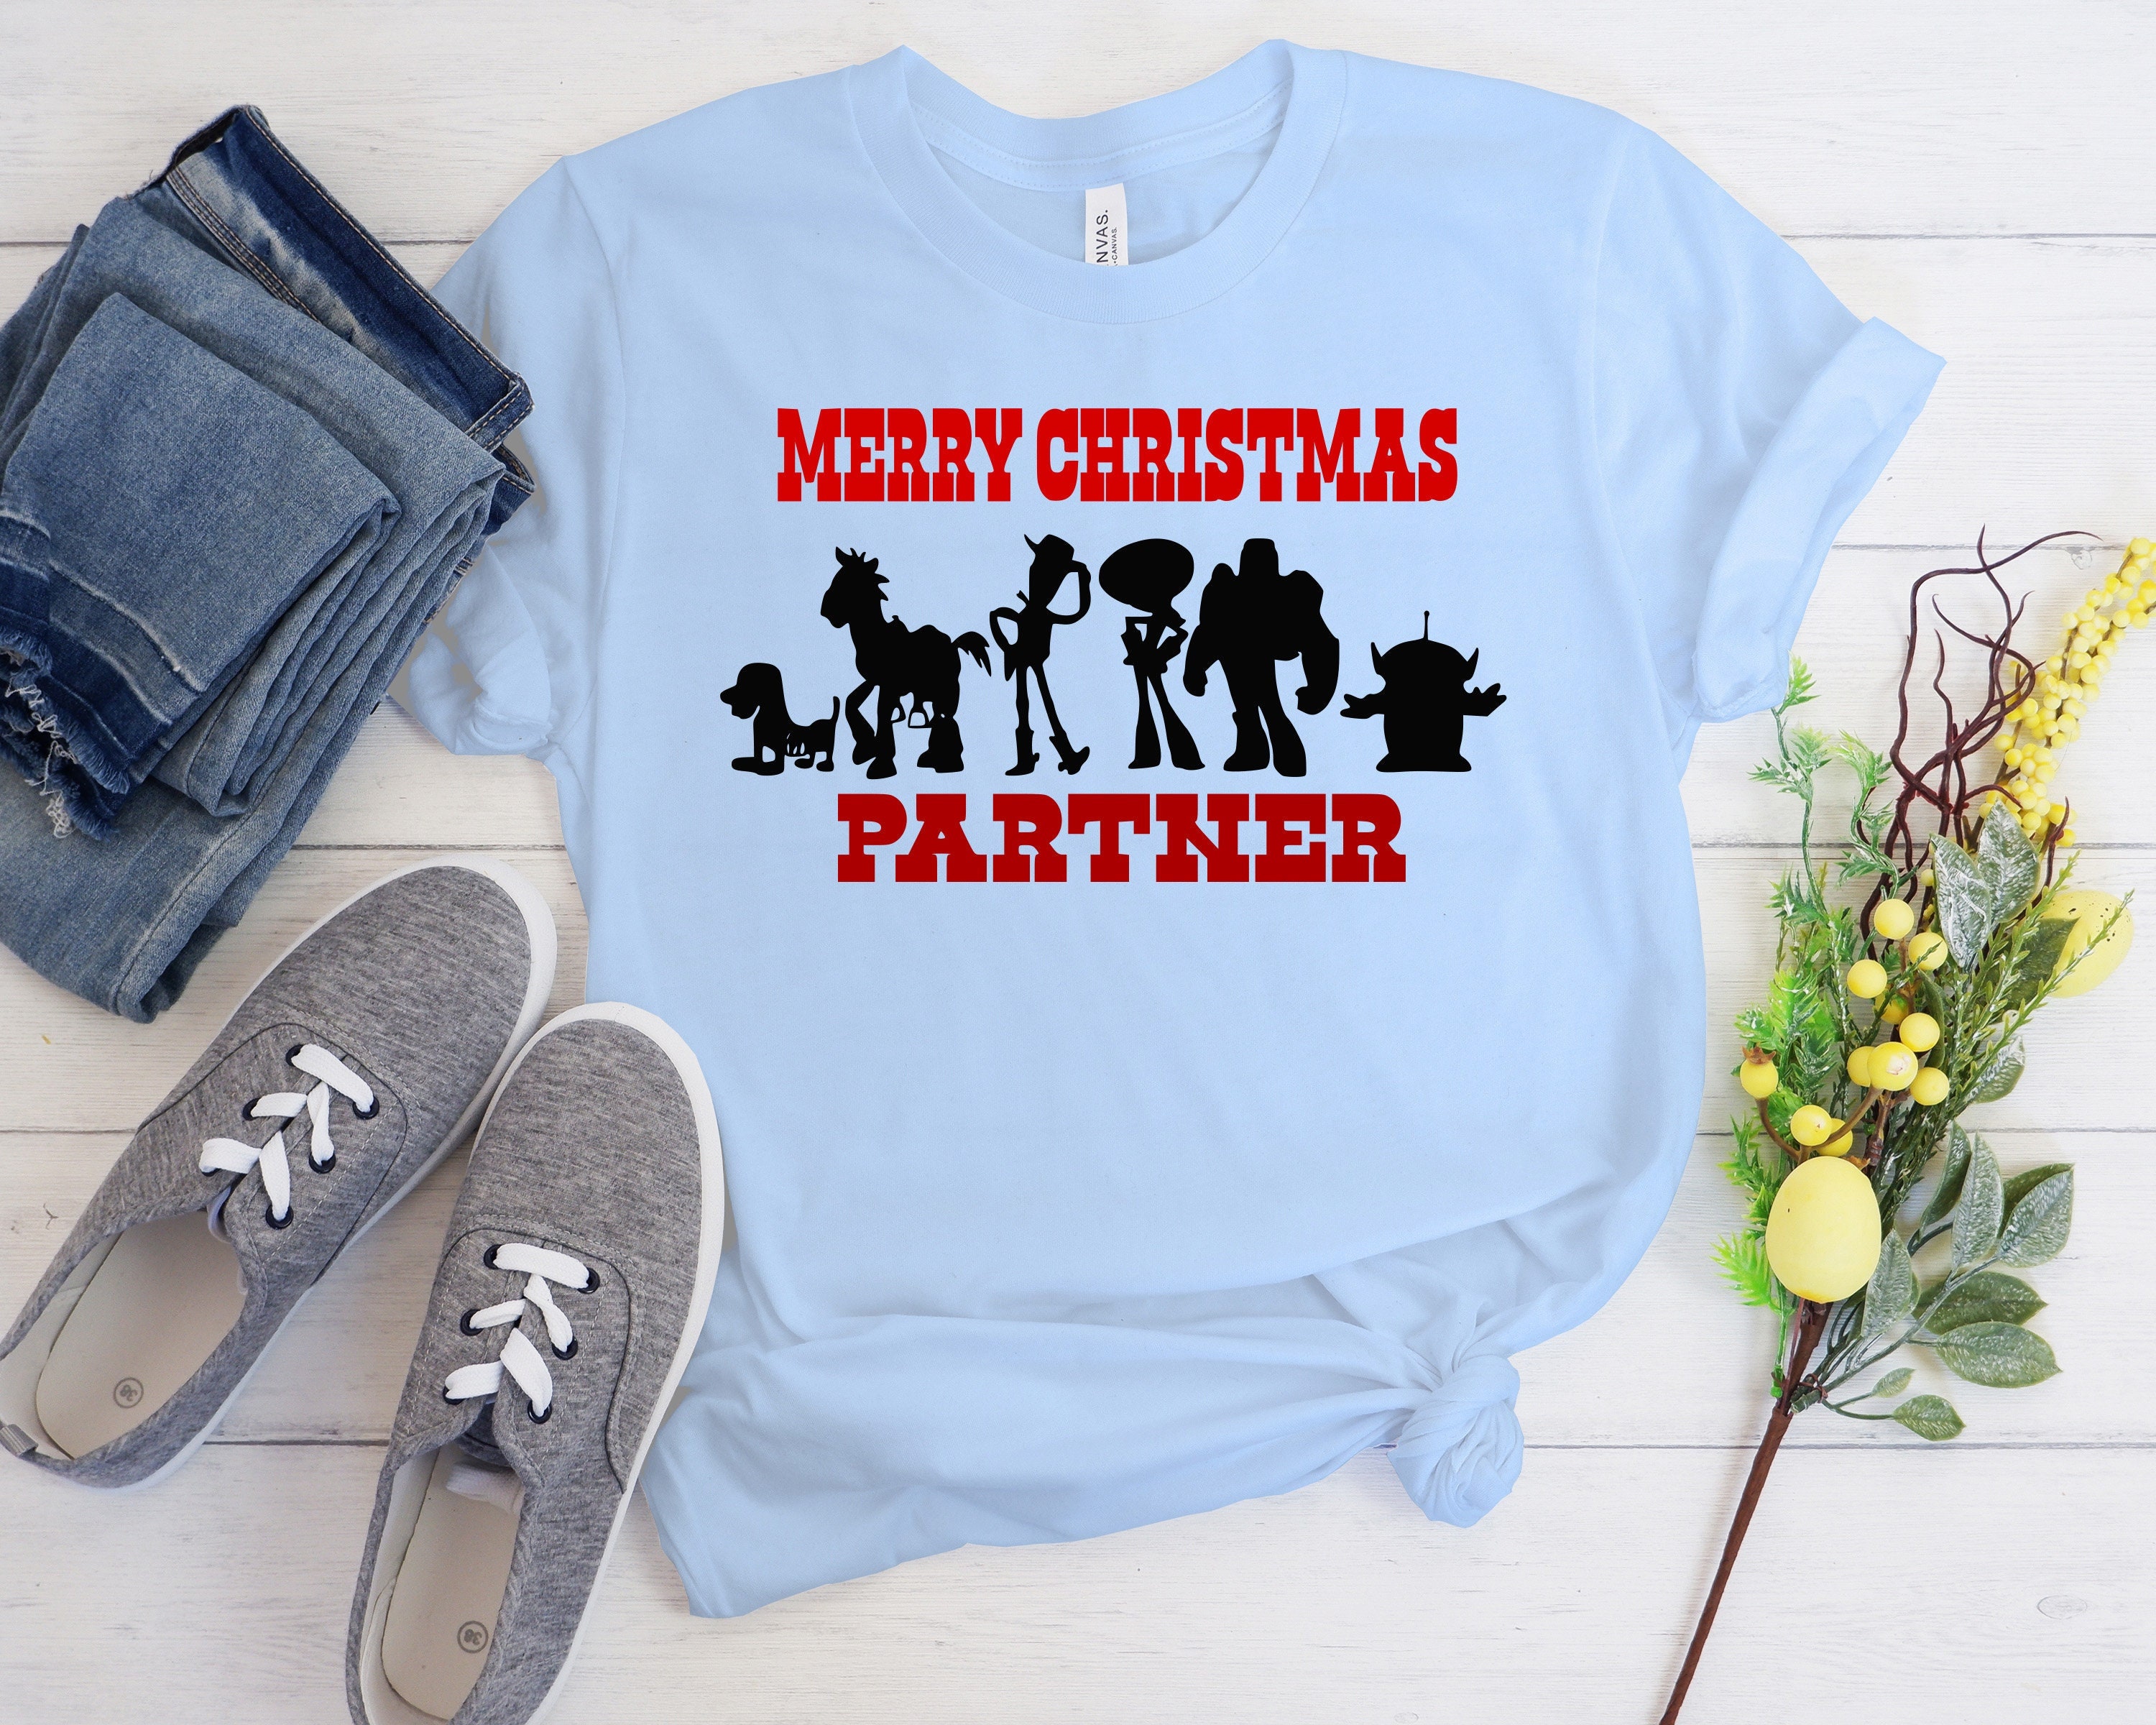 Discover Disney Toy Story Group Santa Merry Christmas Xmas Lights T-Shirt